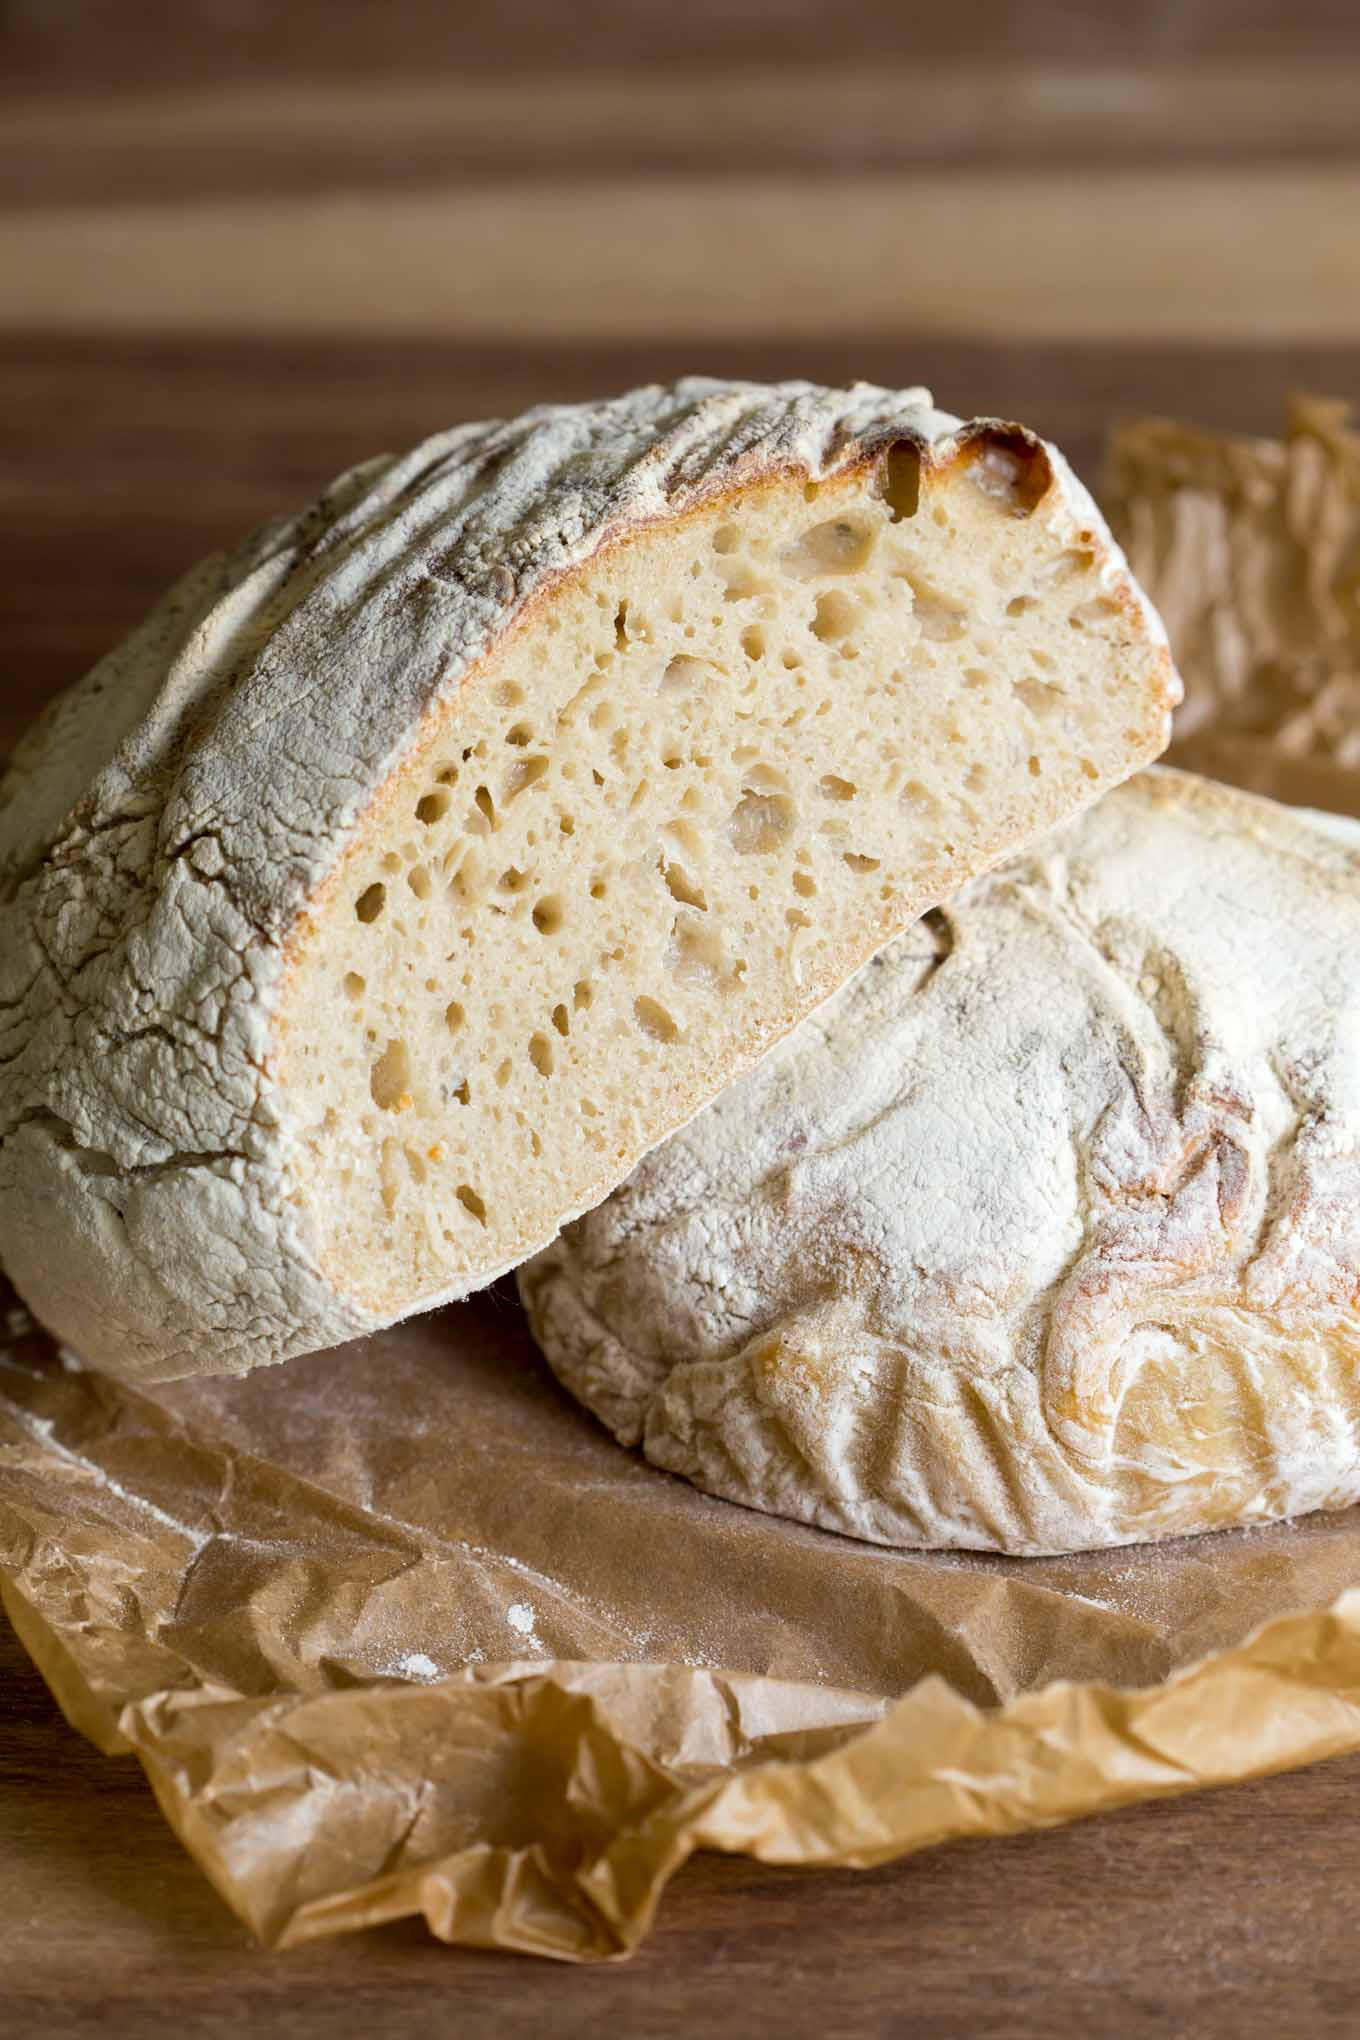 Making Sourdough Bread
 HOW TO MAKE SOURDOUGH BREAD